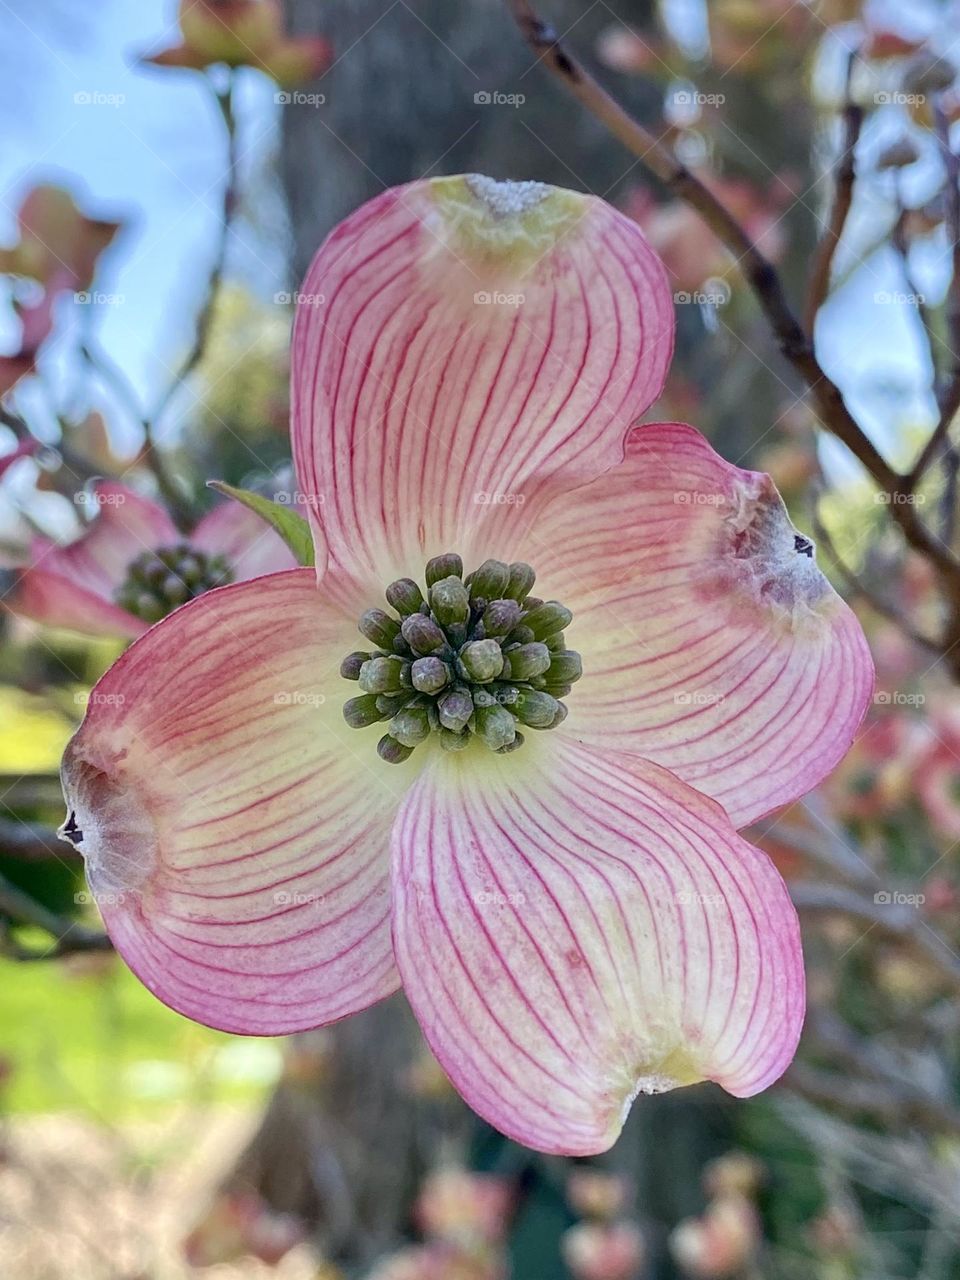 A pink dogwood blossom